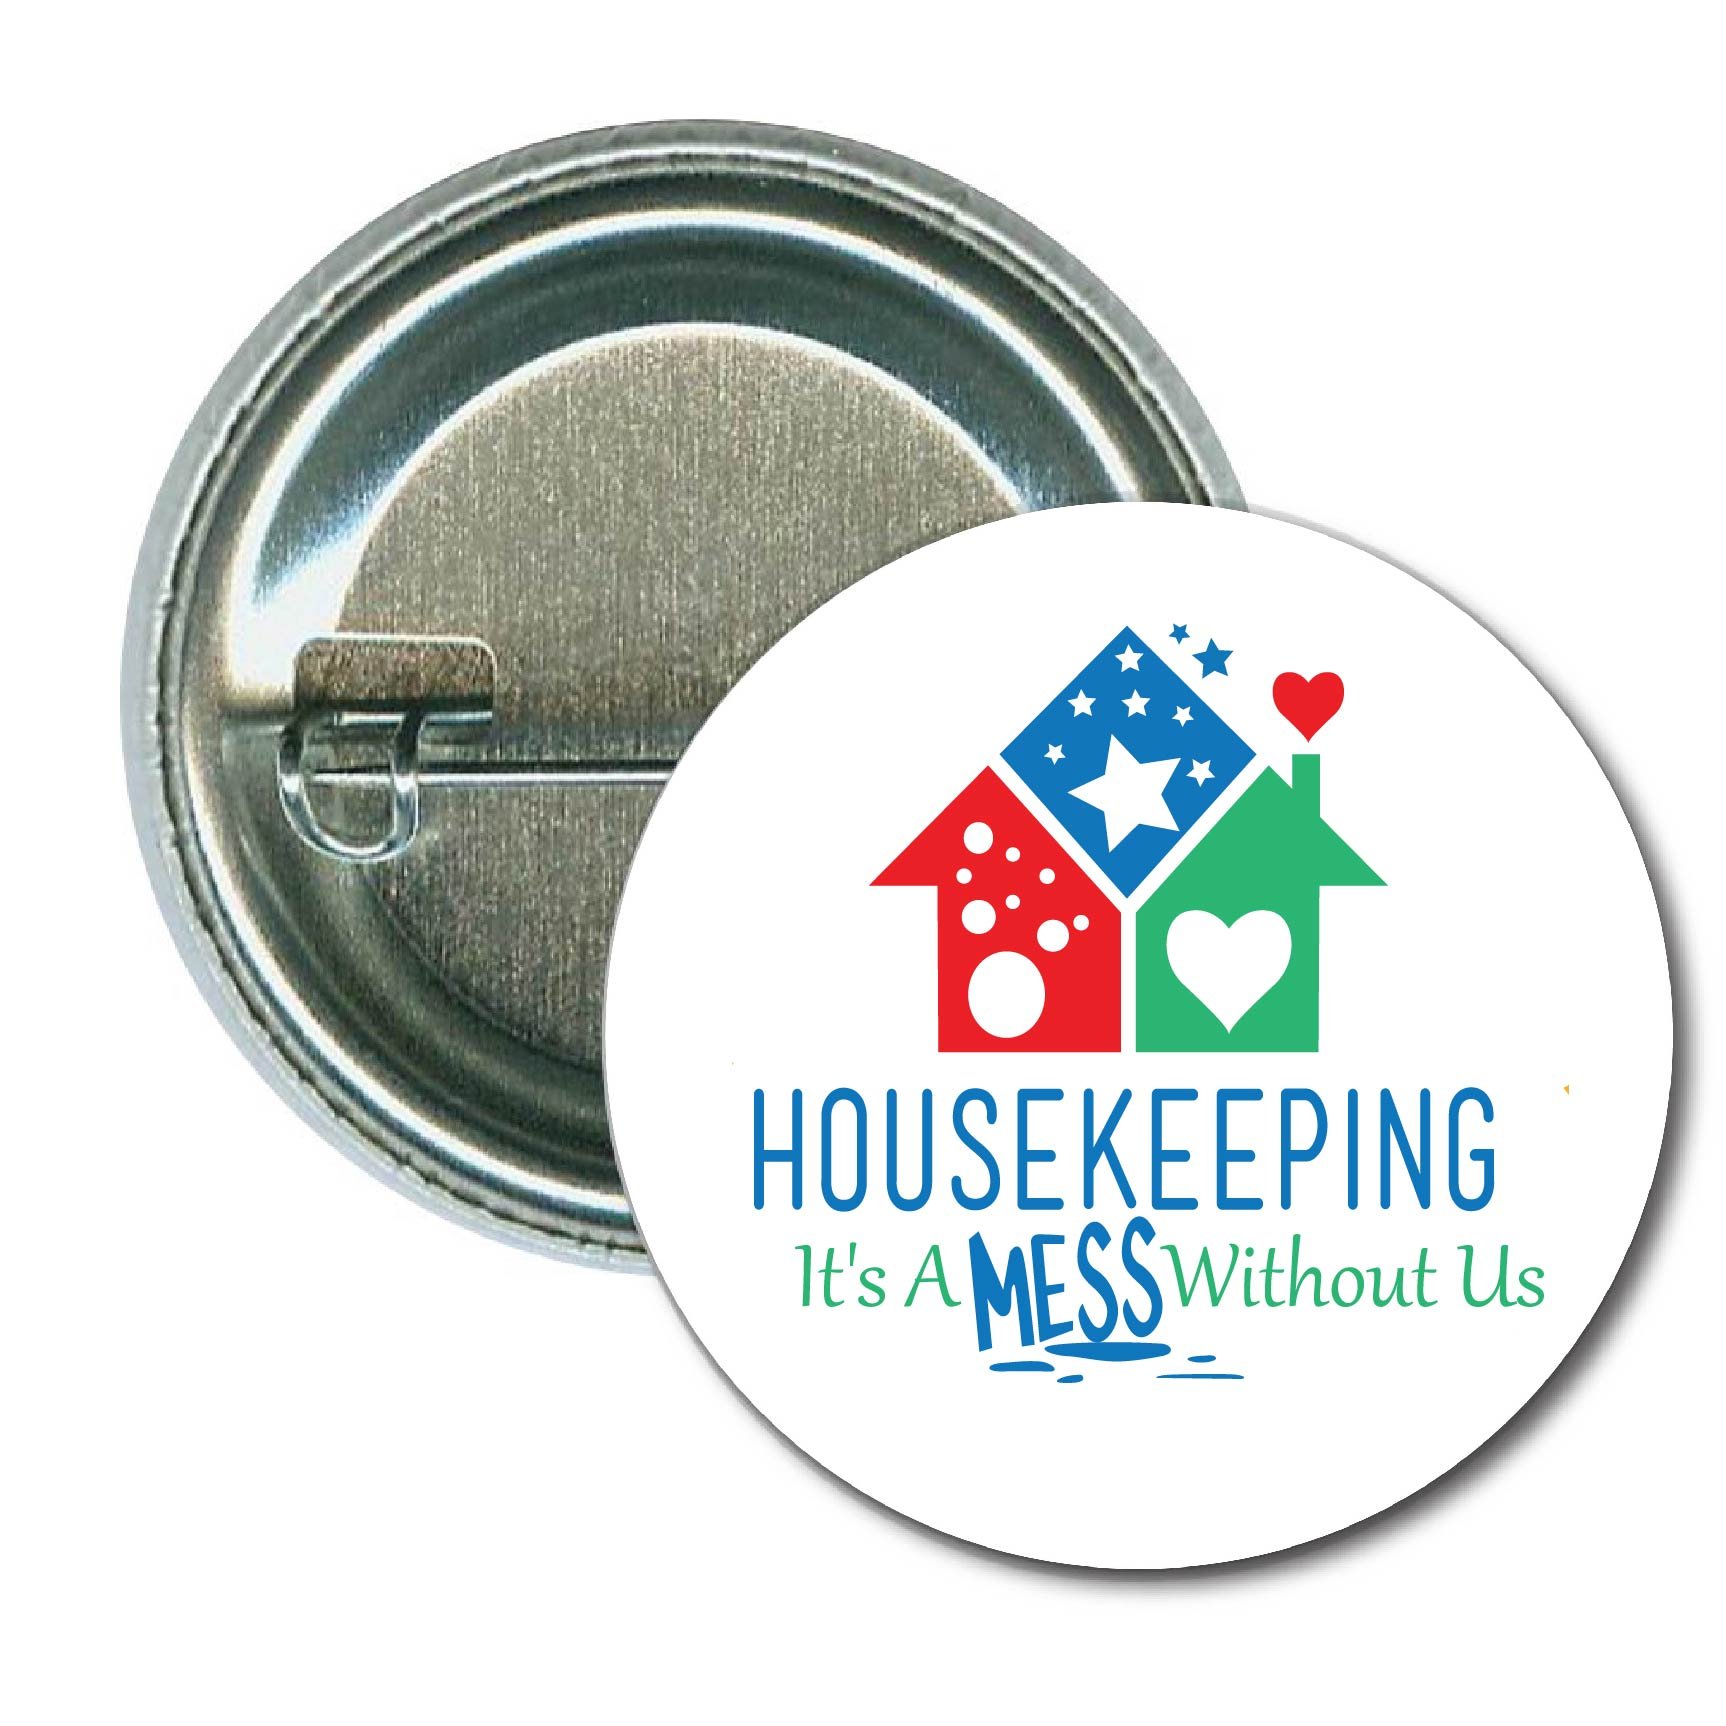 Housekeeping Week Buttons 1687526128 0 